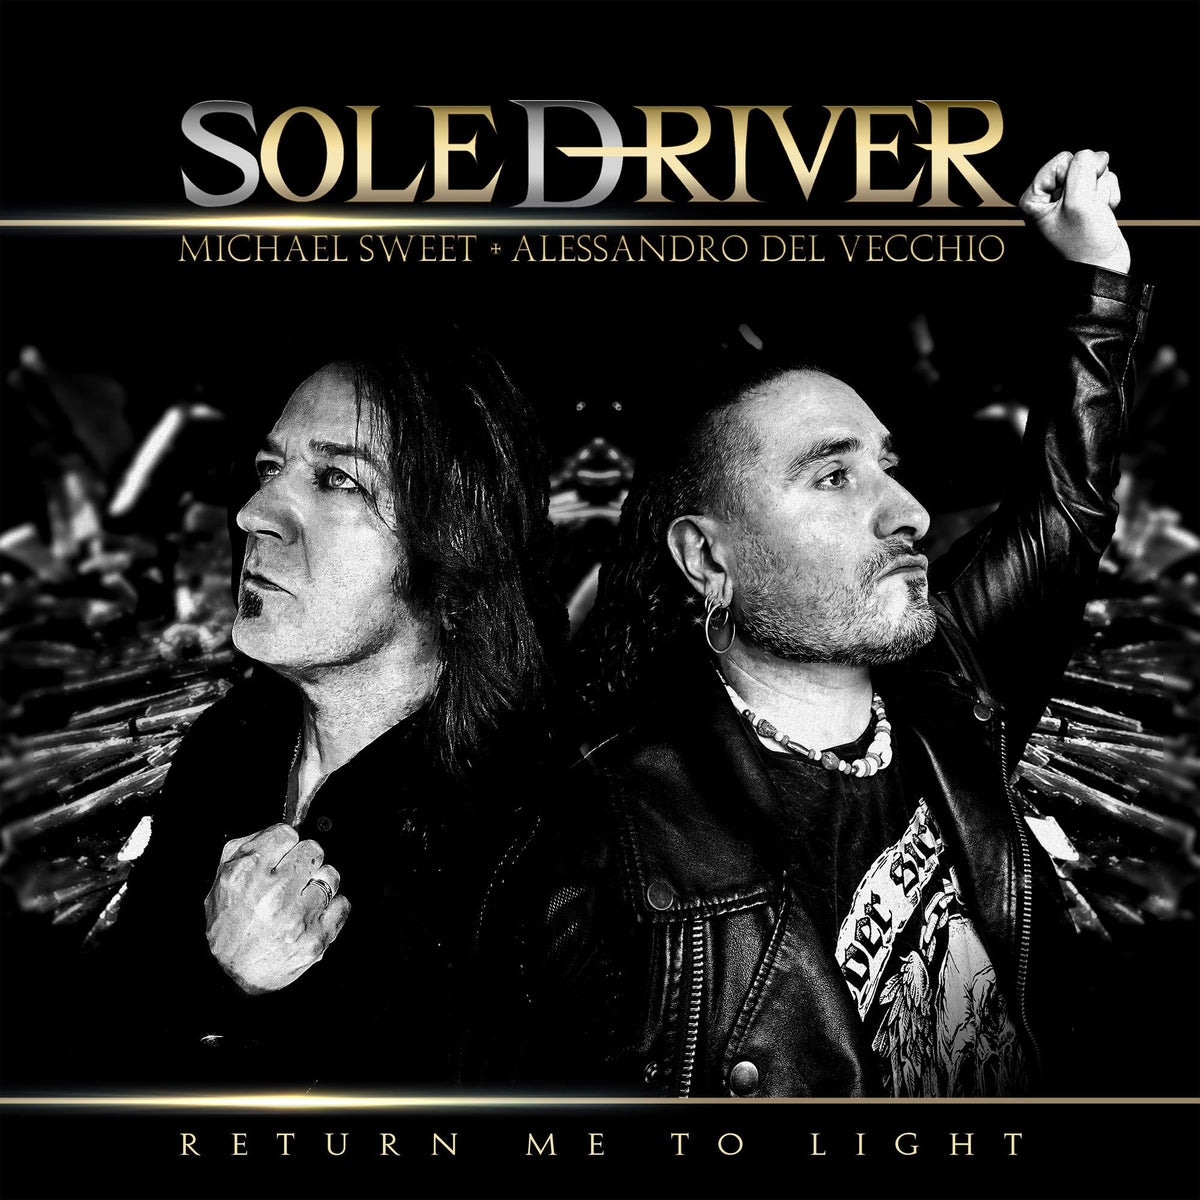 Frontiers Return – Srl - Me SOLEDRIVER - Records To EU CD Light